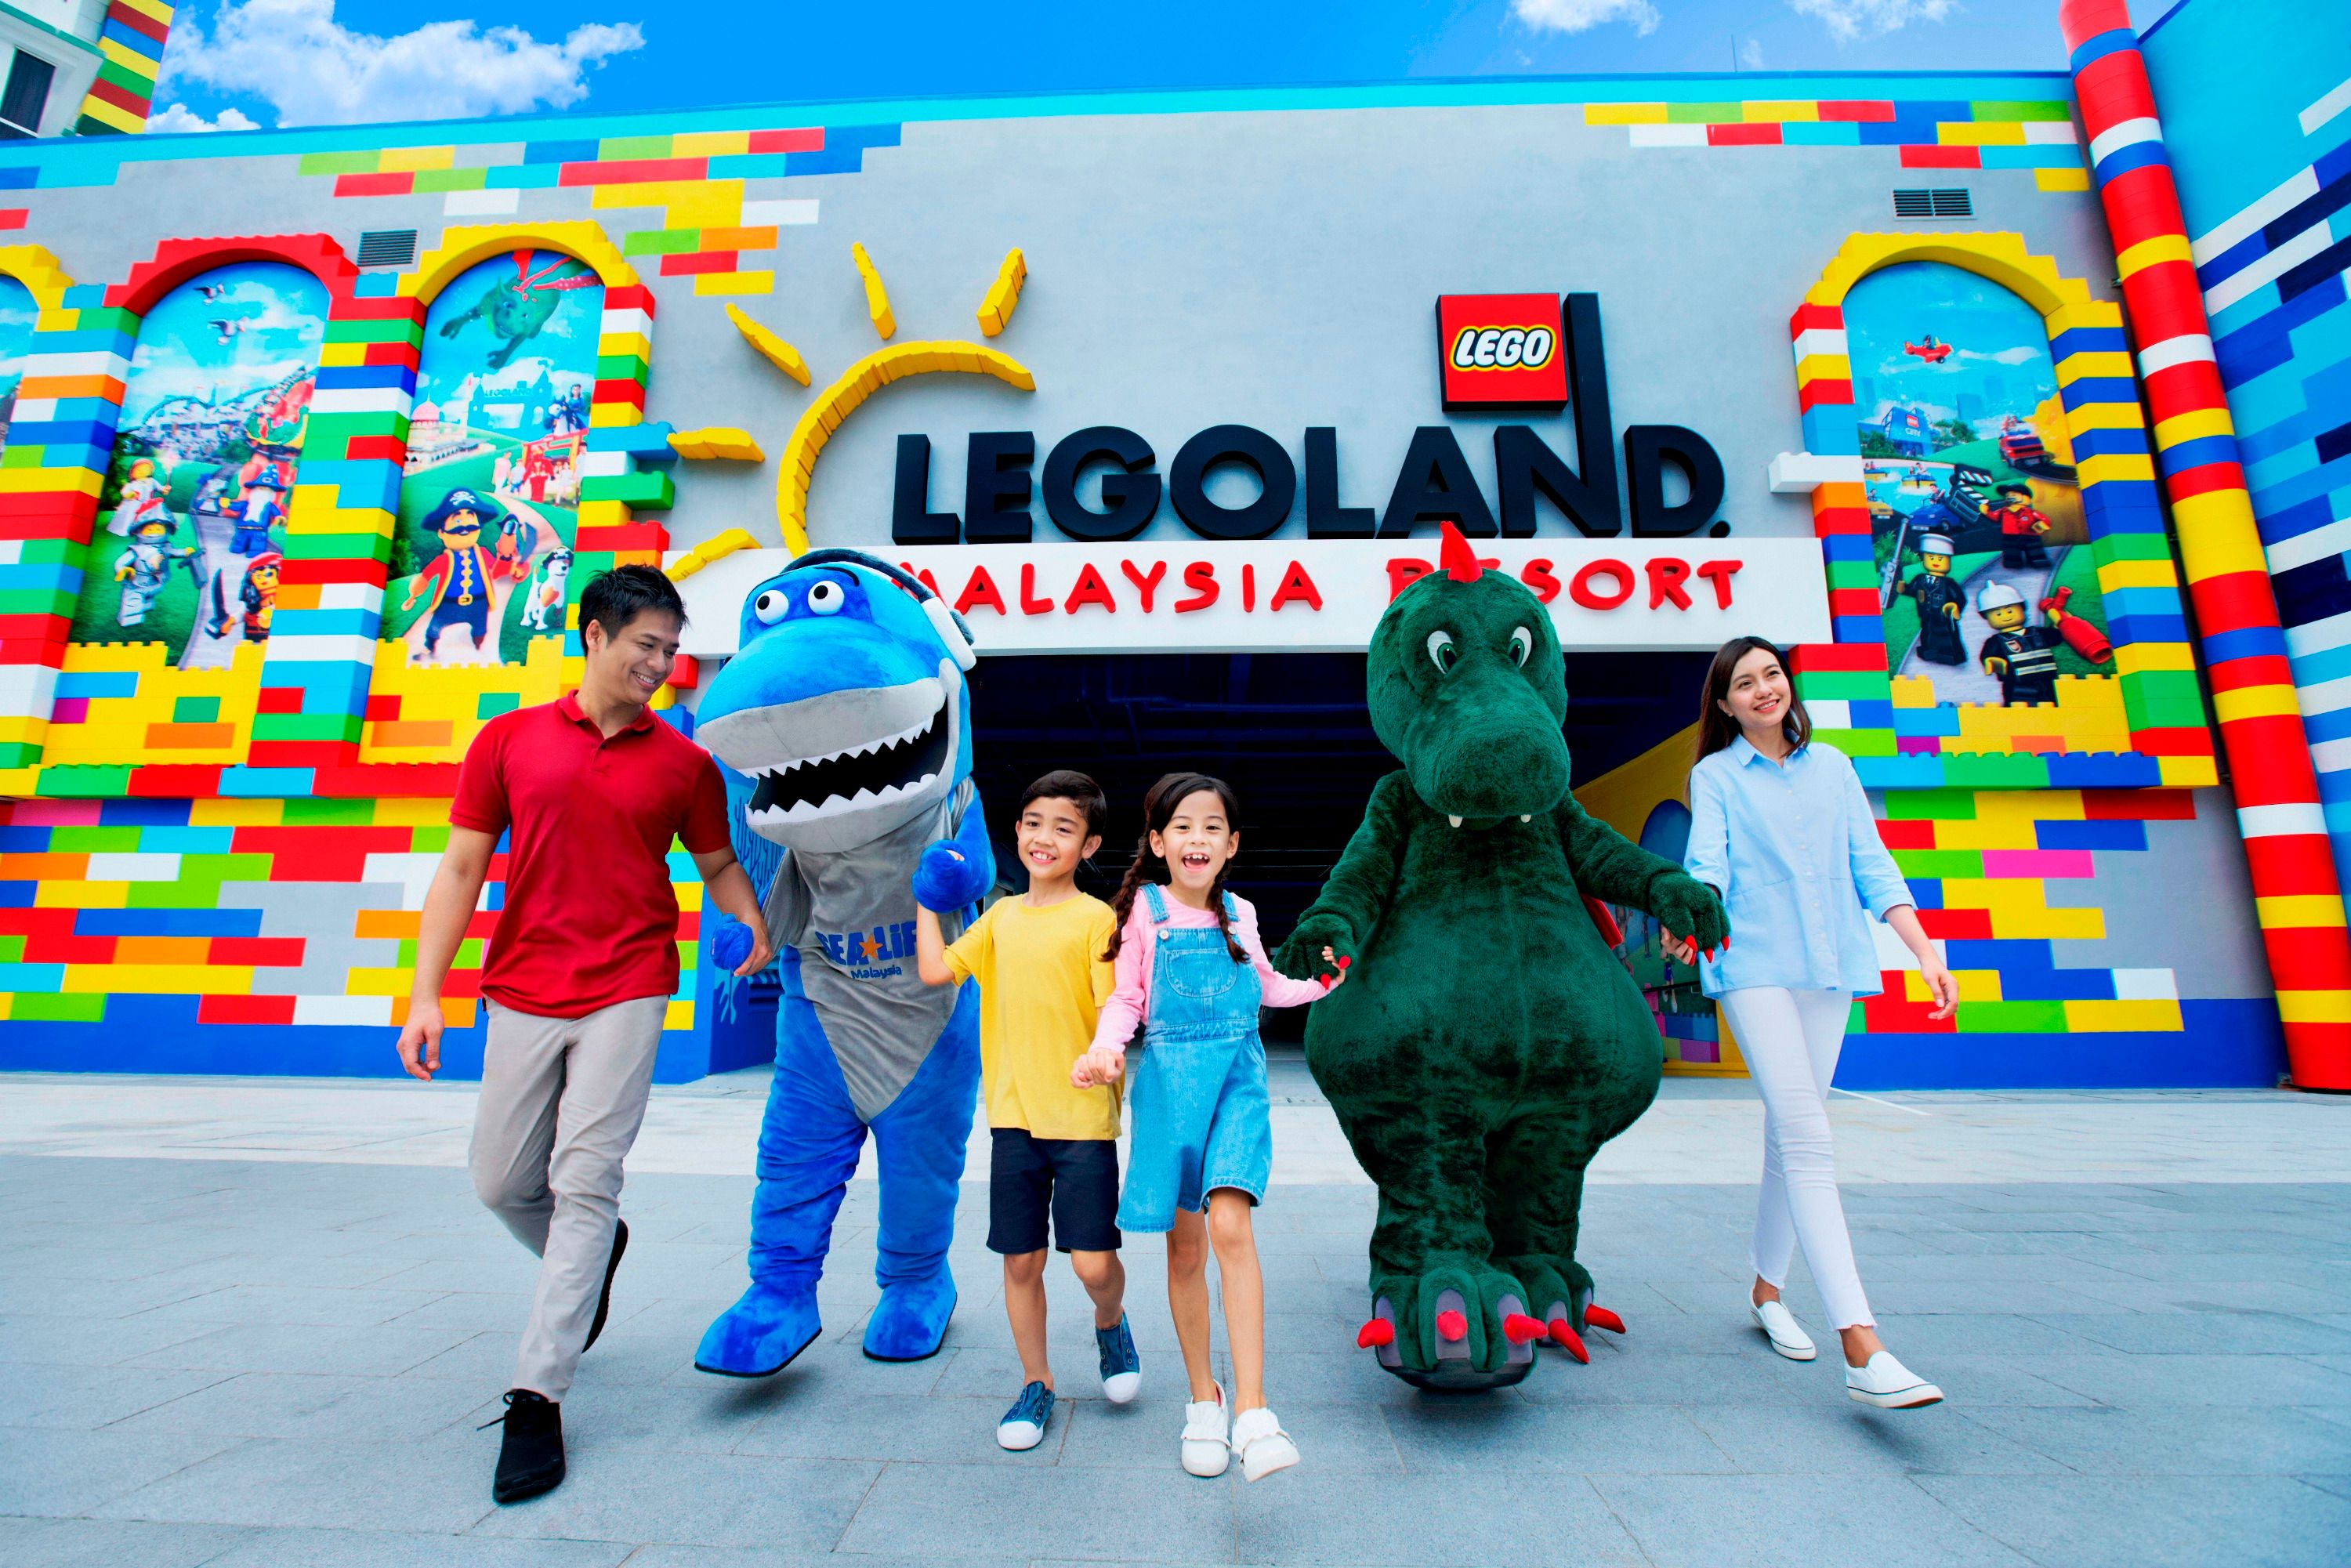 Imagen del tour: Entrada para Legoland Malasia